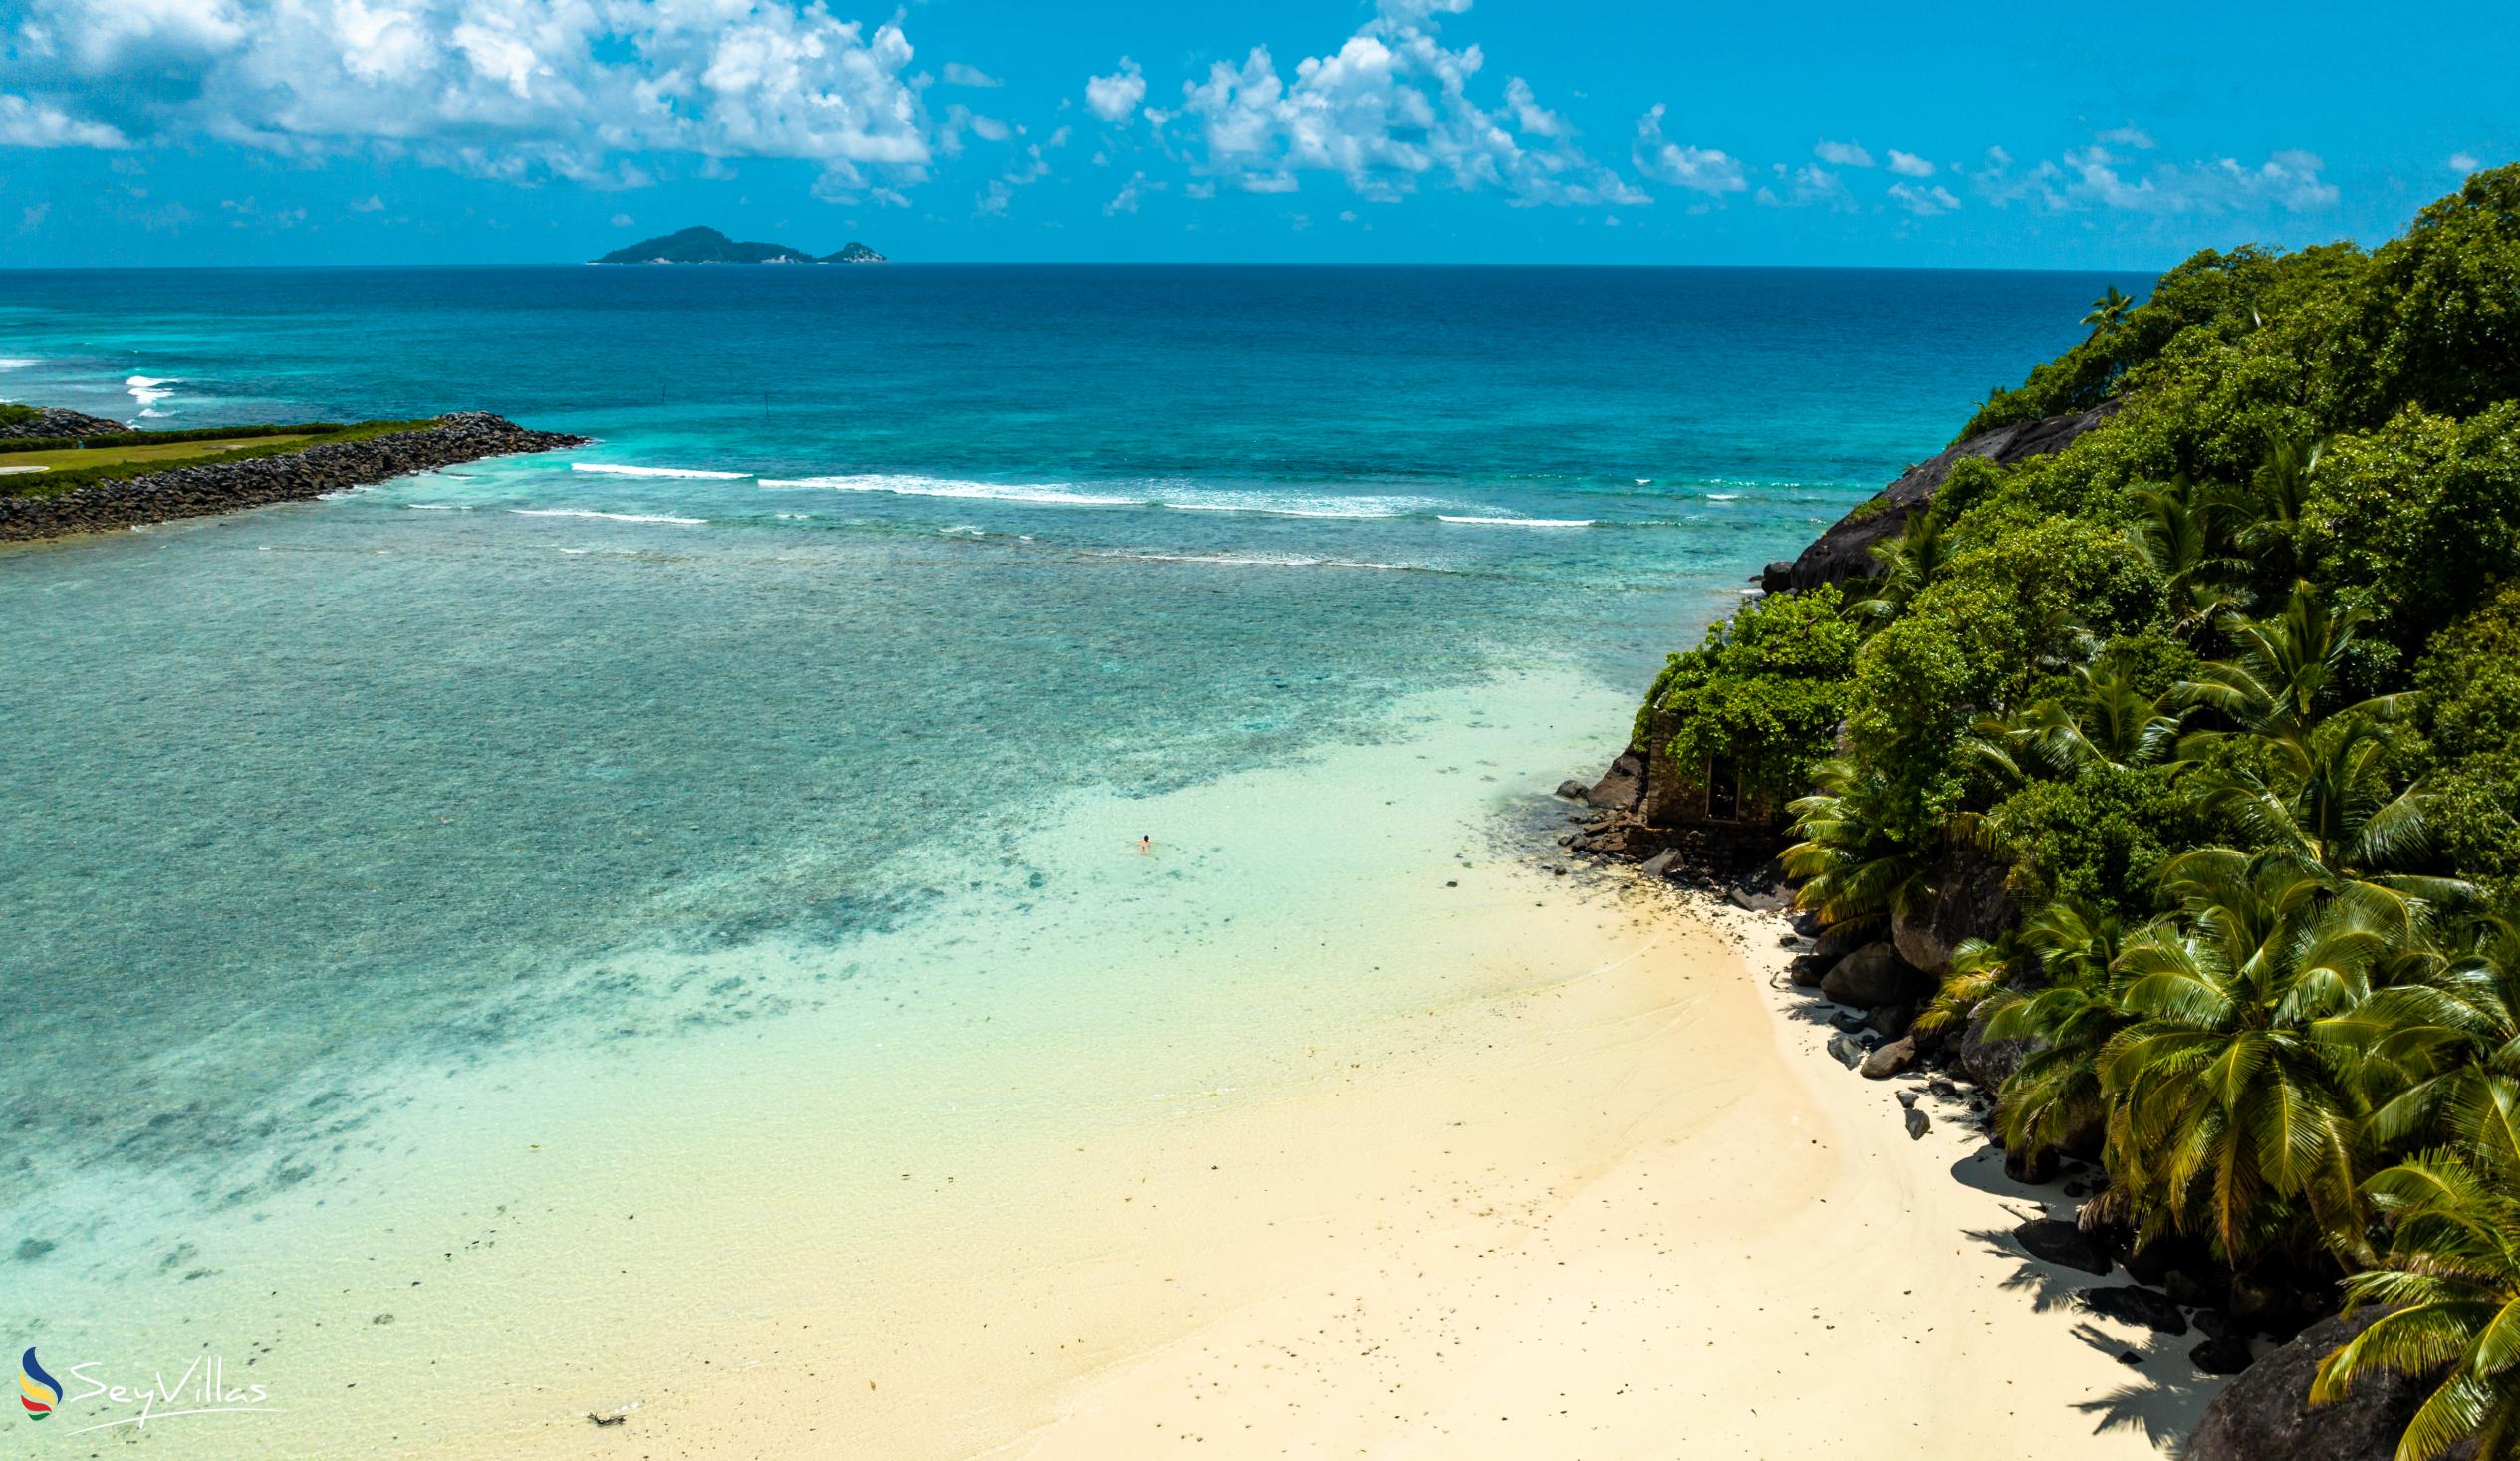 Photo 124: La Belle Tortue - Location - Silhouette Island (Seychelles)